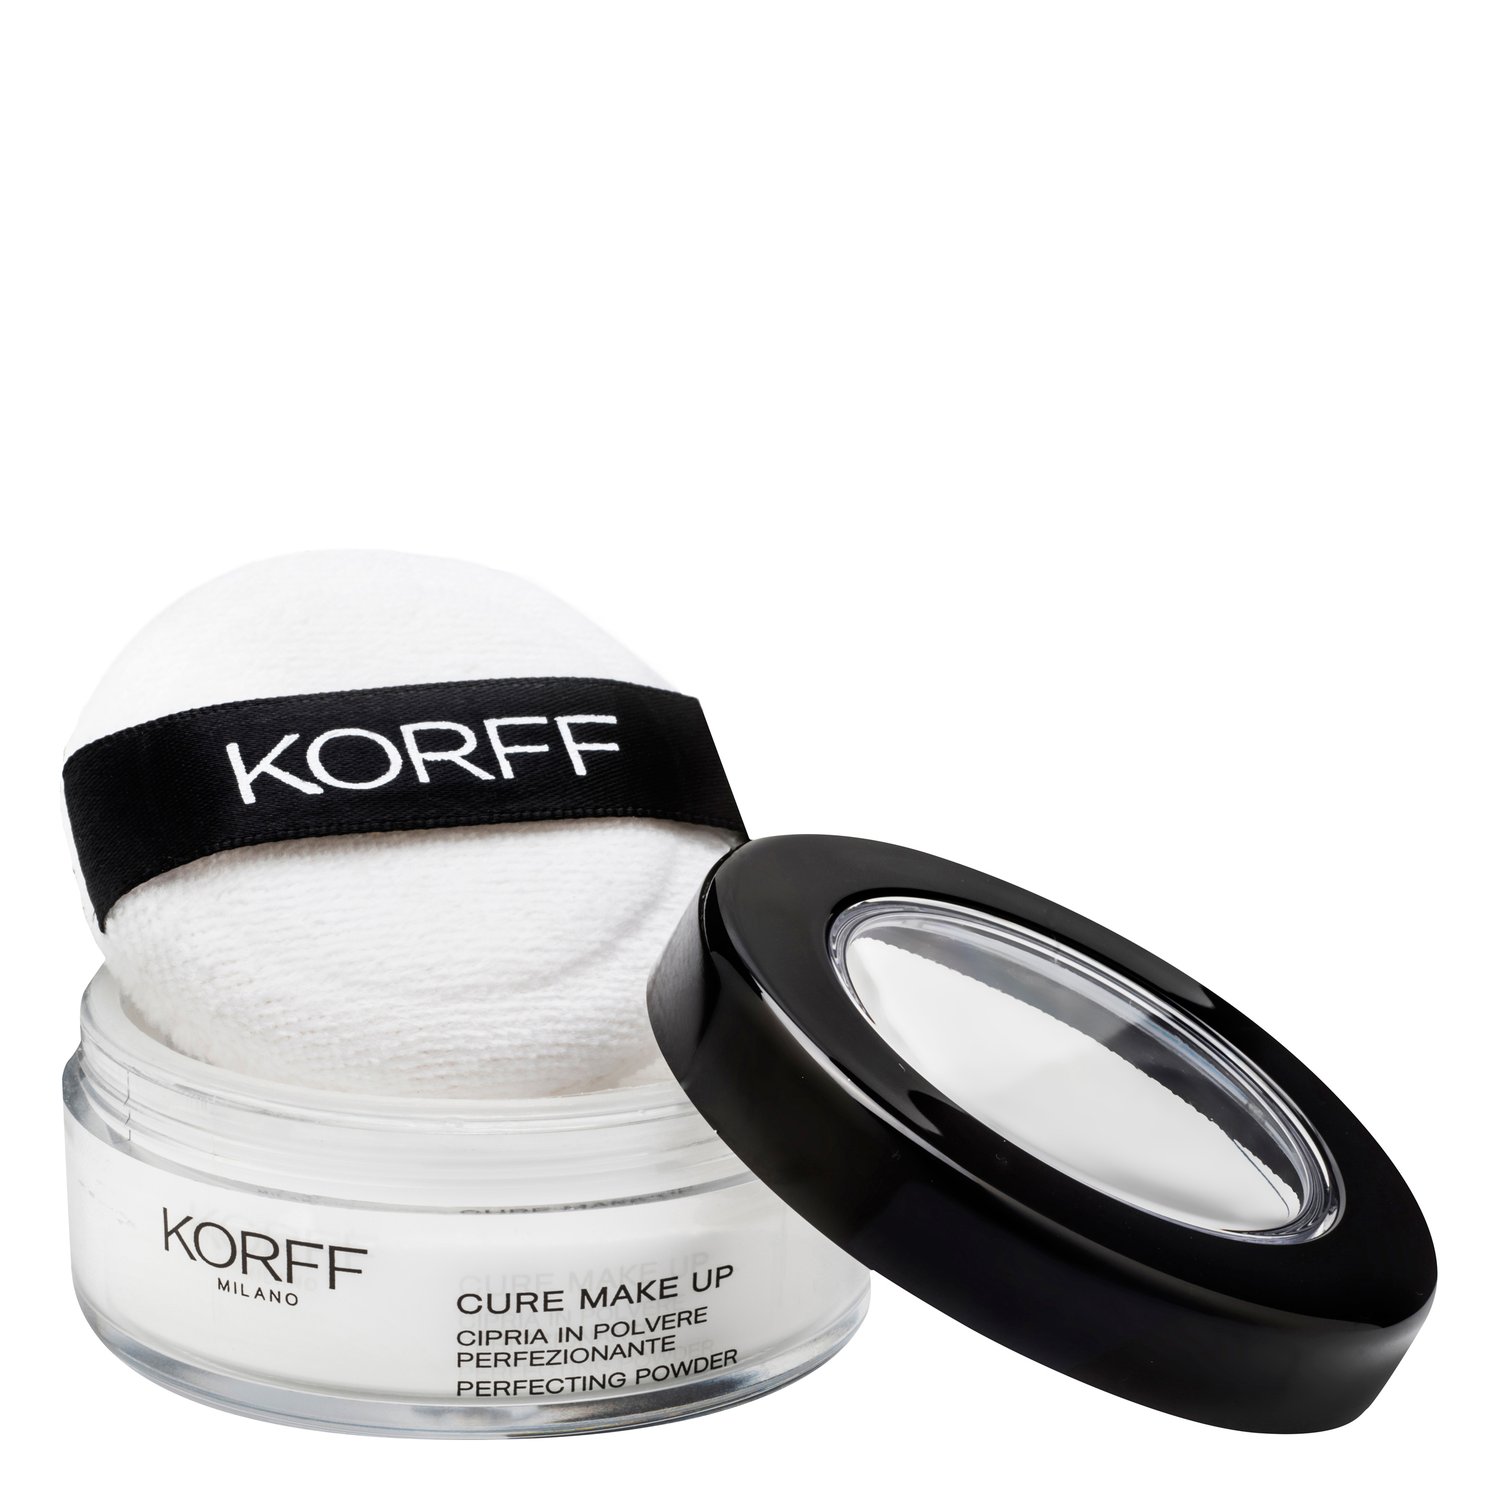 Korff Cure Make Up Cipria In Polvere Perfezionante 10g